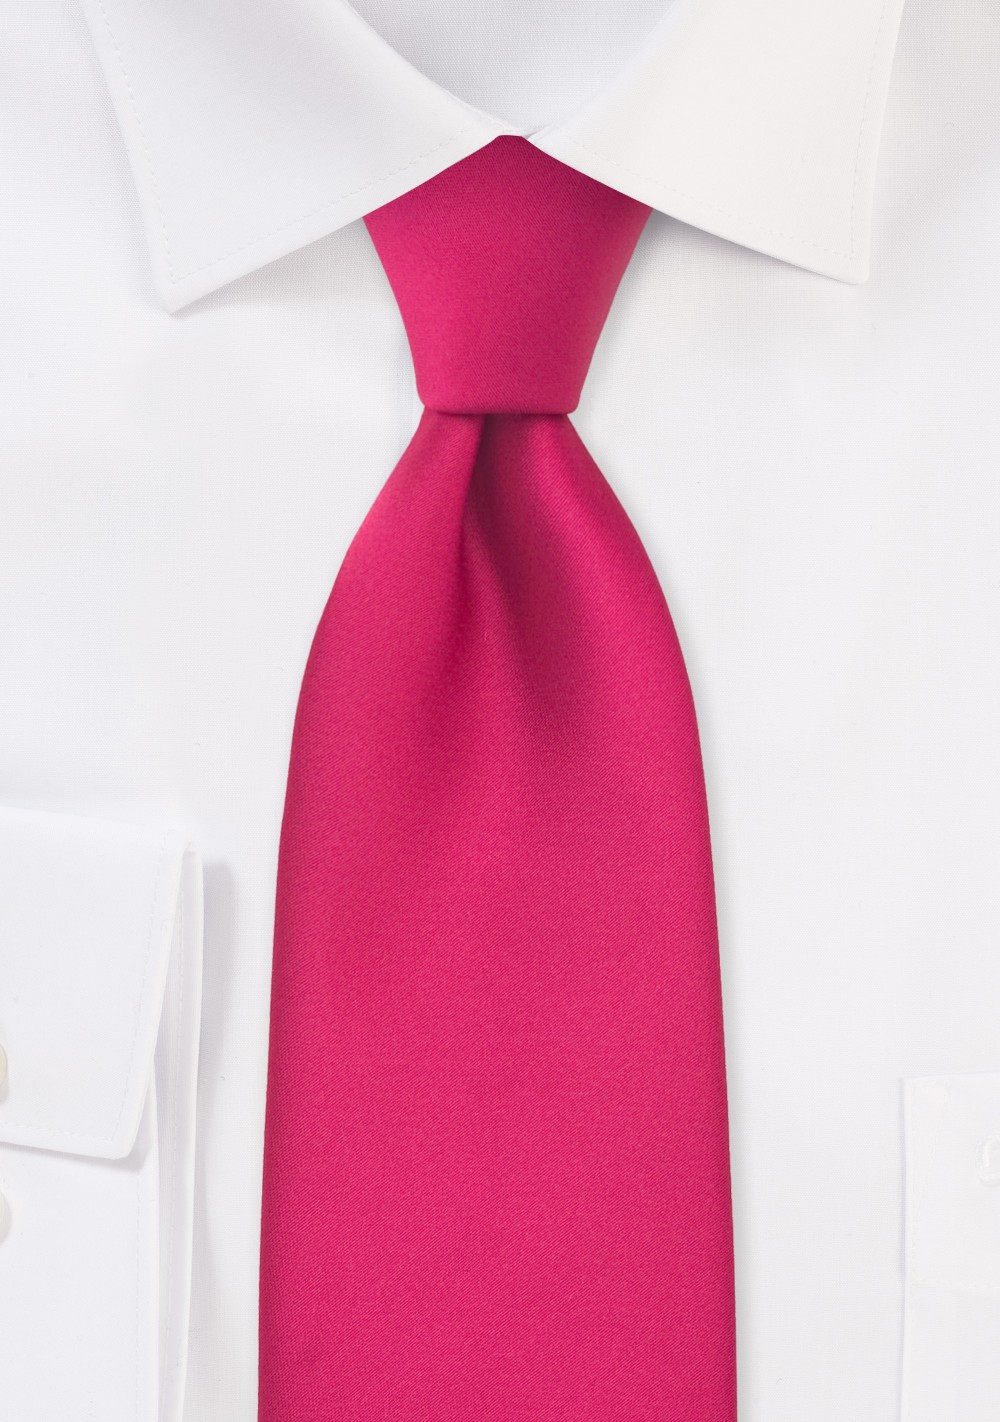 XL Tie in Magenta Pink